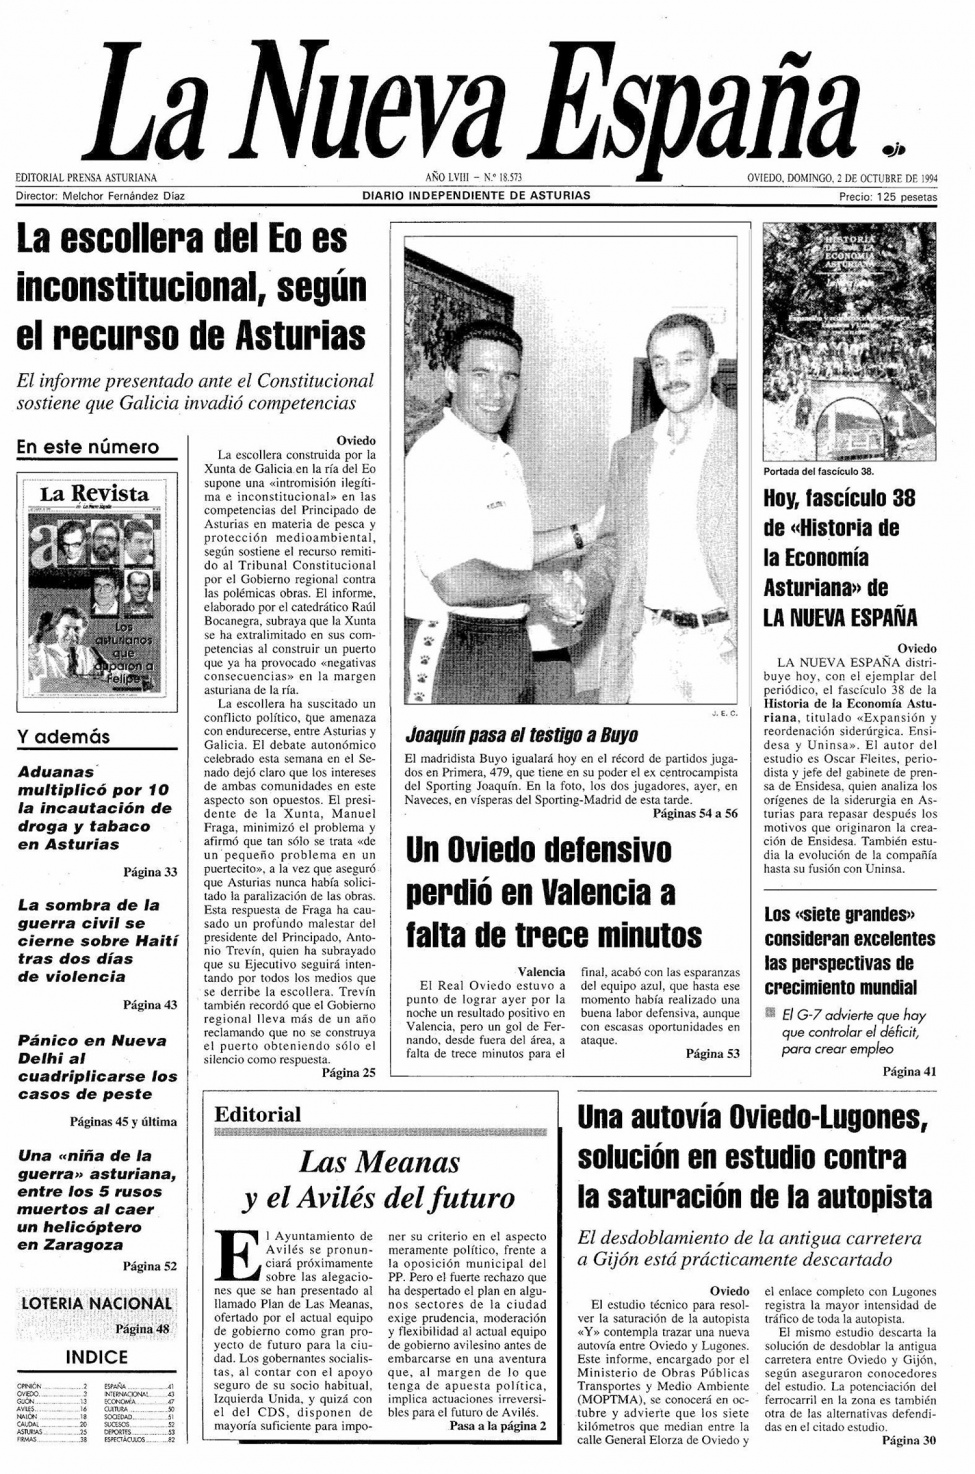 Portada del Domingo, 2 de Octubre de 1994